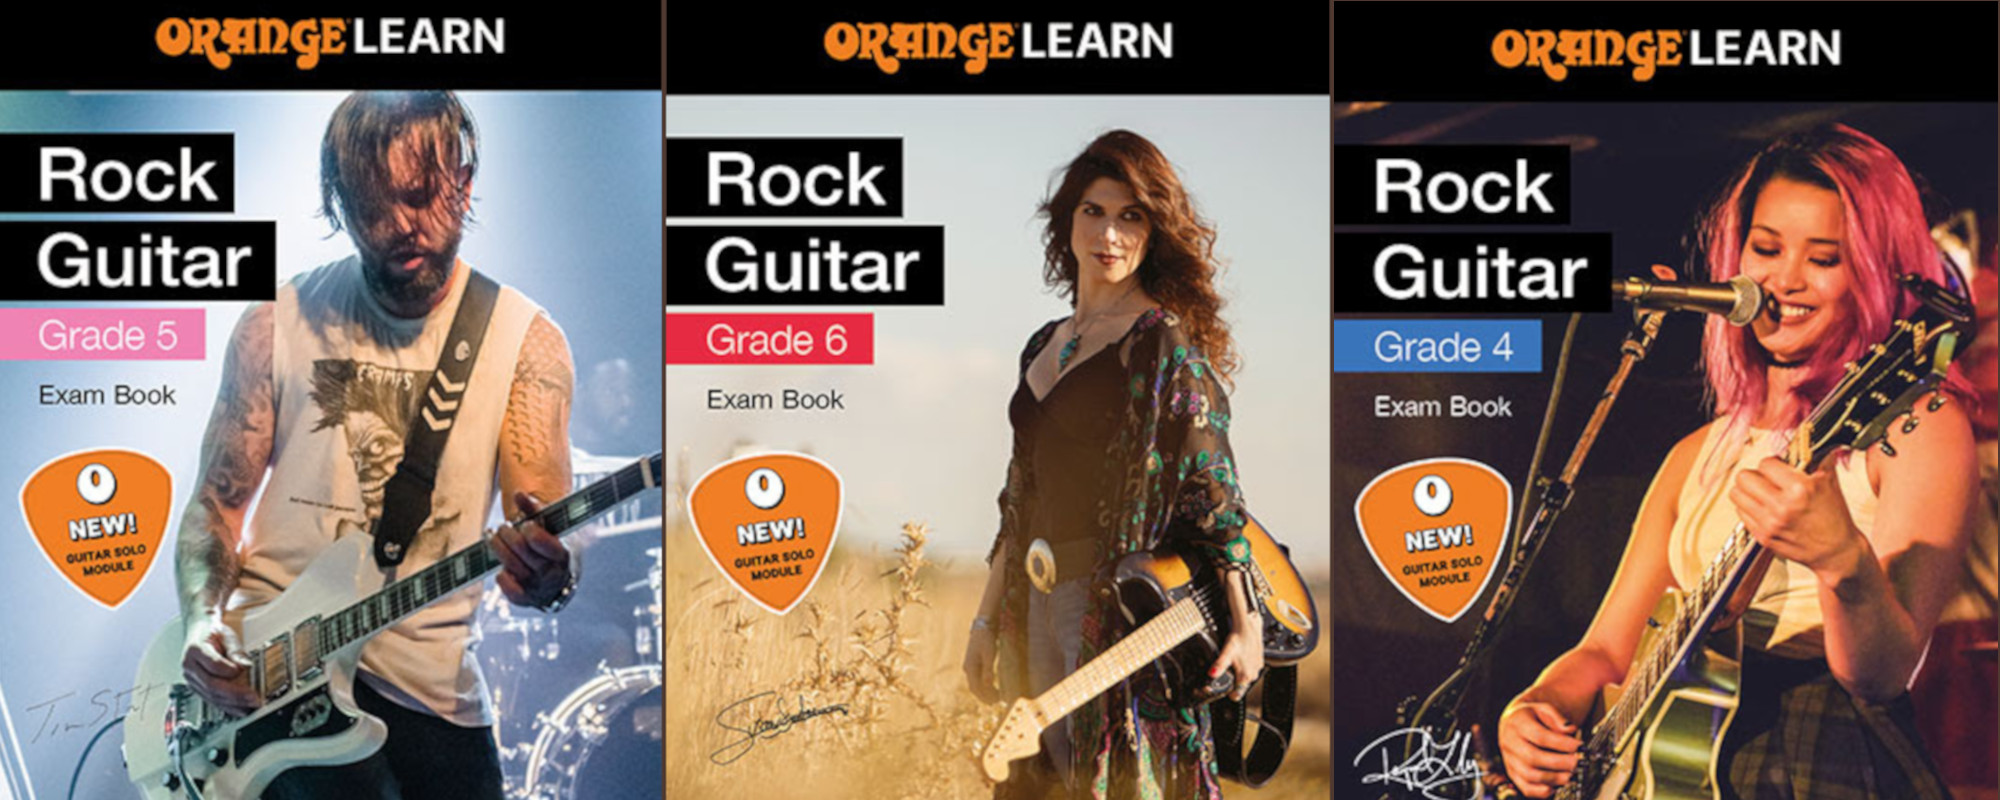 Gear Review: Orange Learn Adds Graded Rock Guitar Books